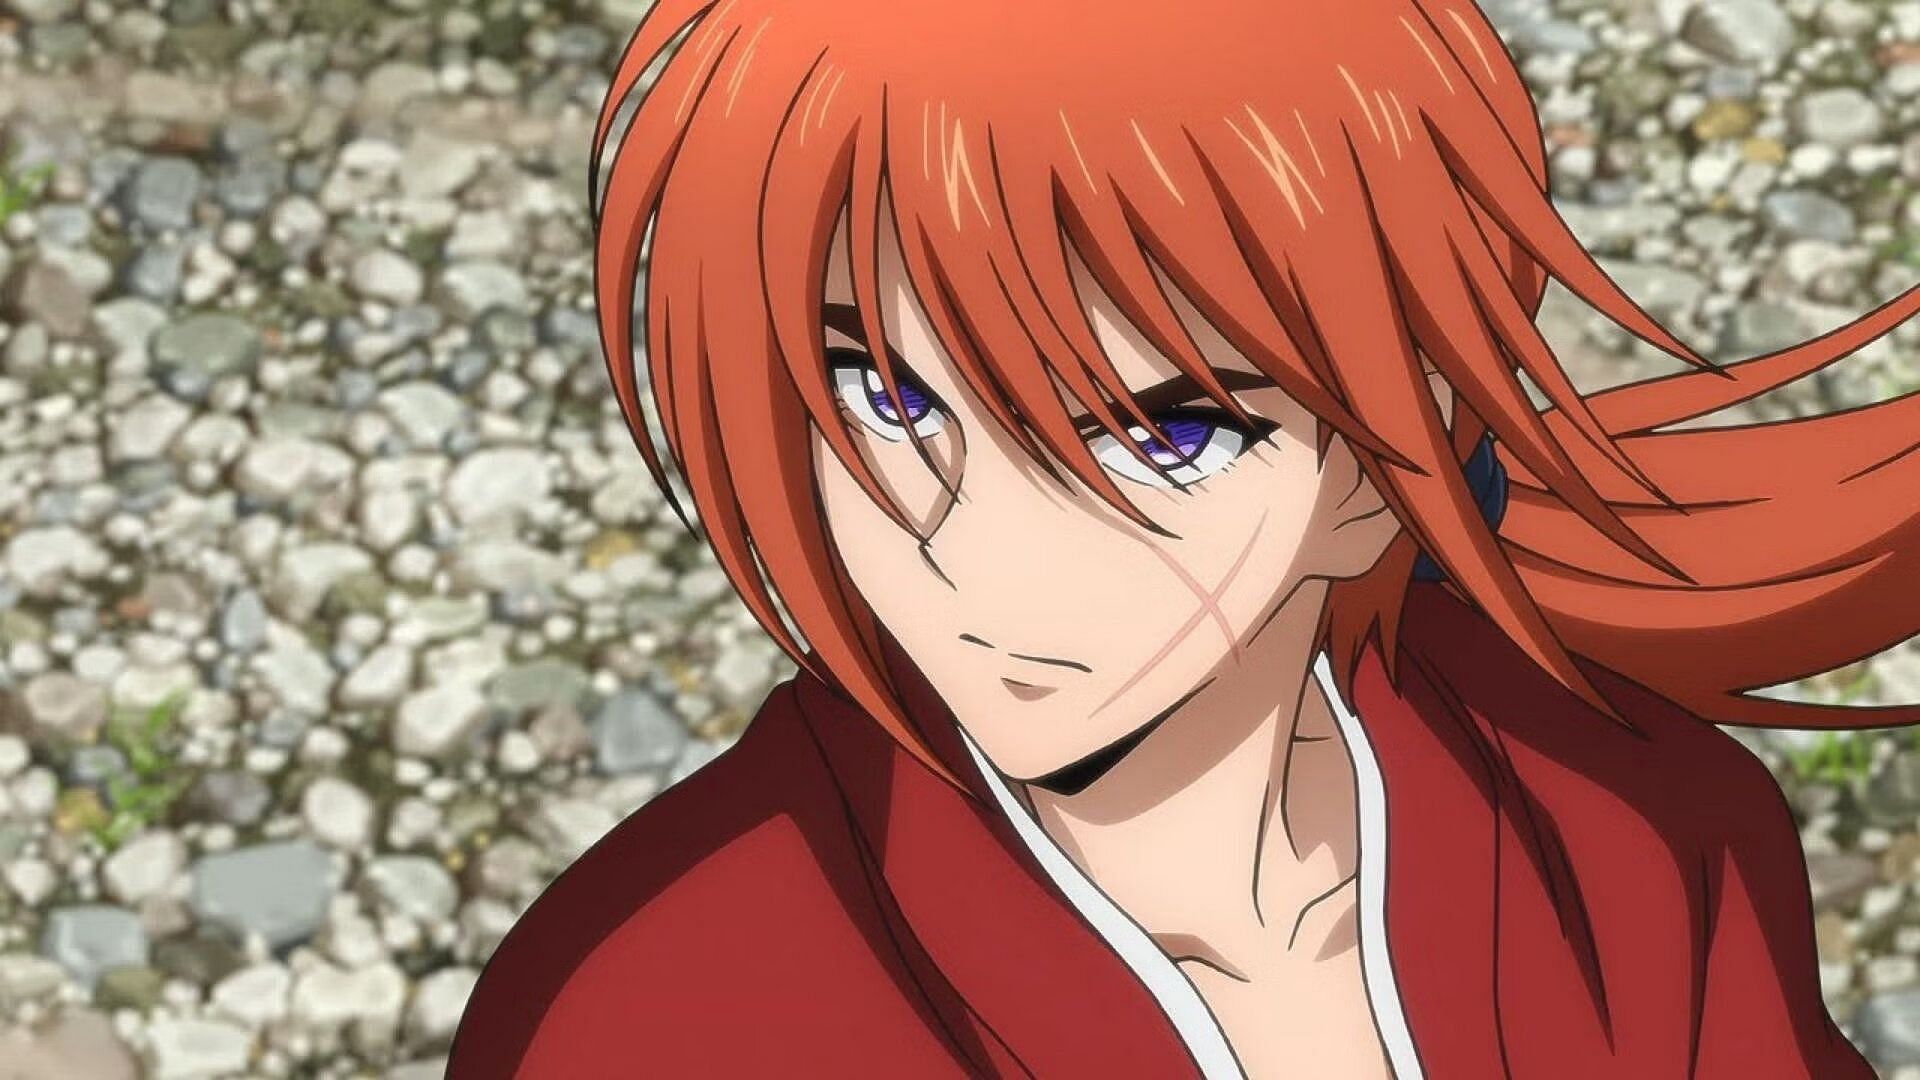 Kenshin as seen in the recent anime remake (Image via Liden Films)